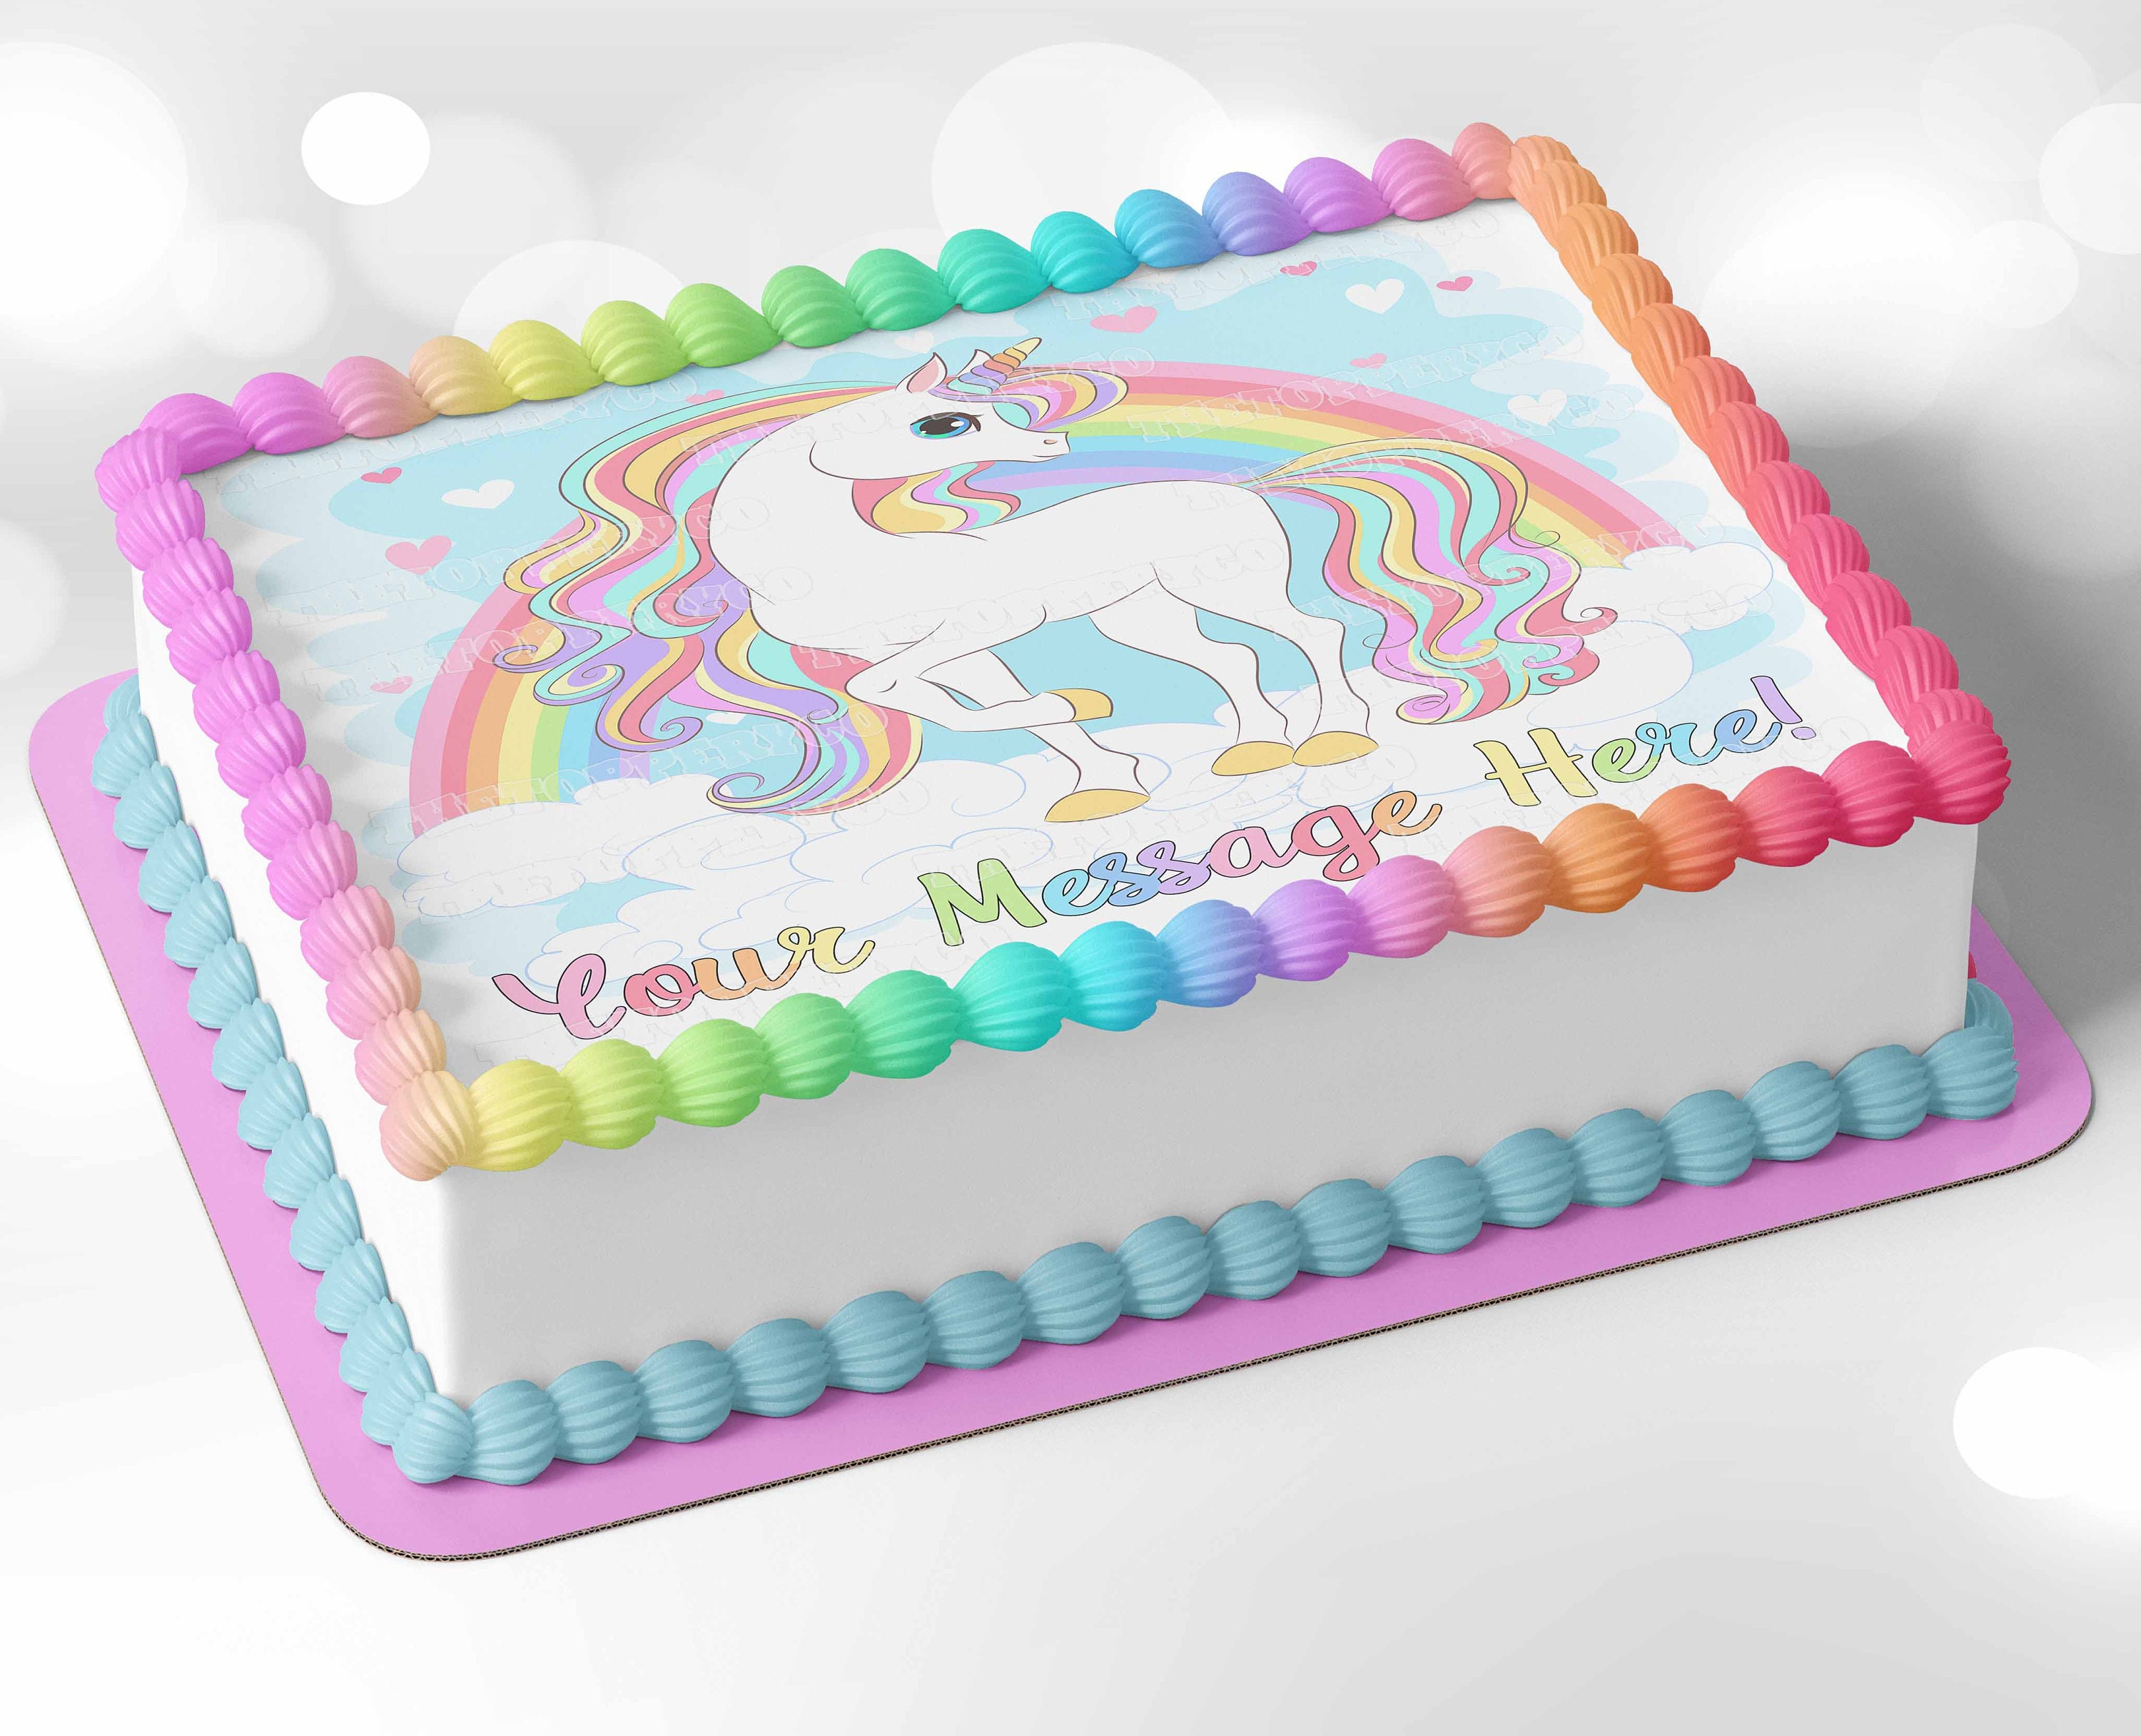 27 Magical Unicorn Cake Ideas - Good Party Ideas